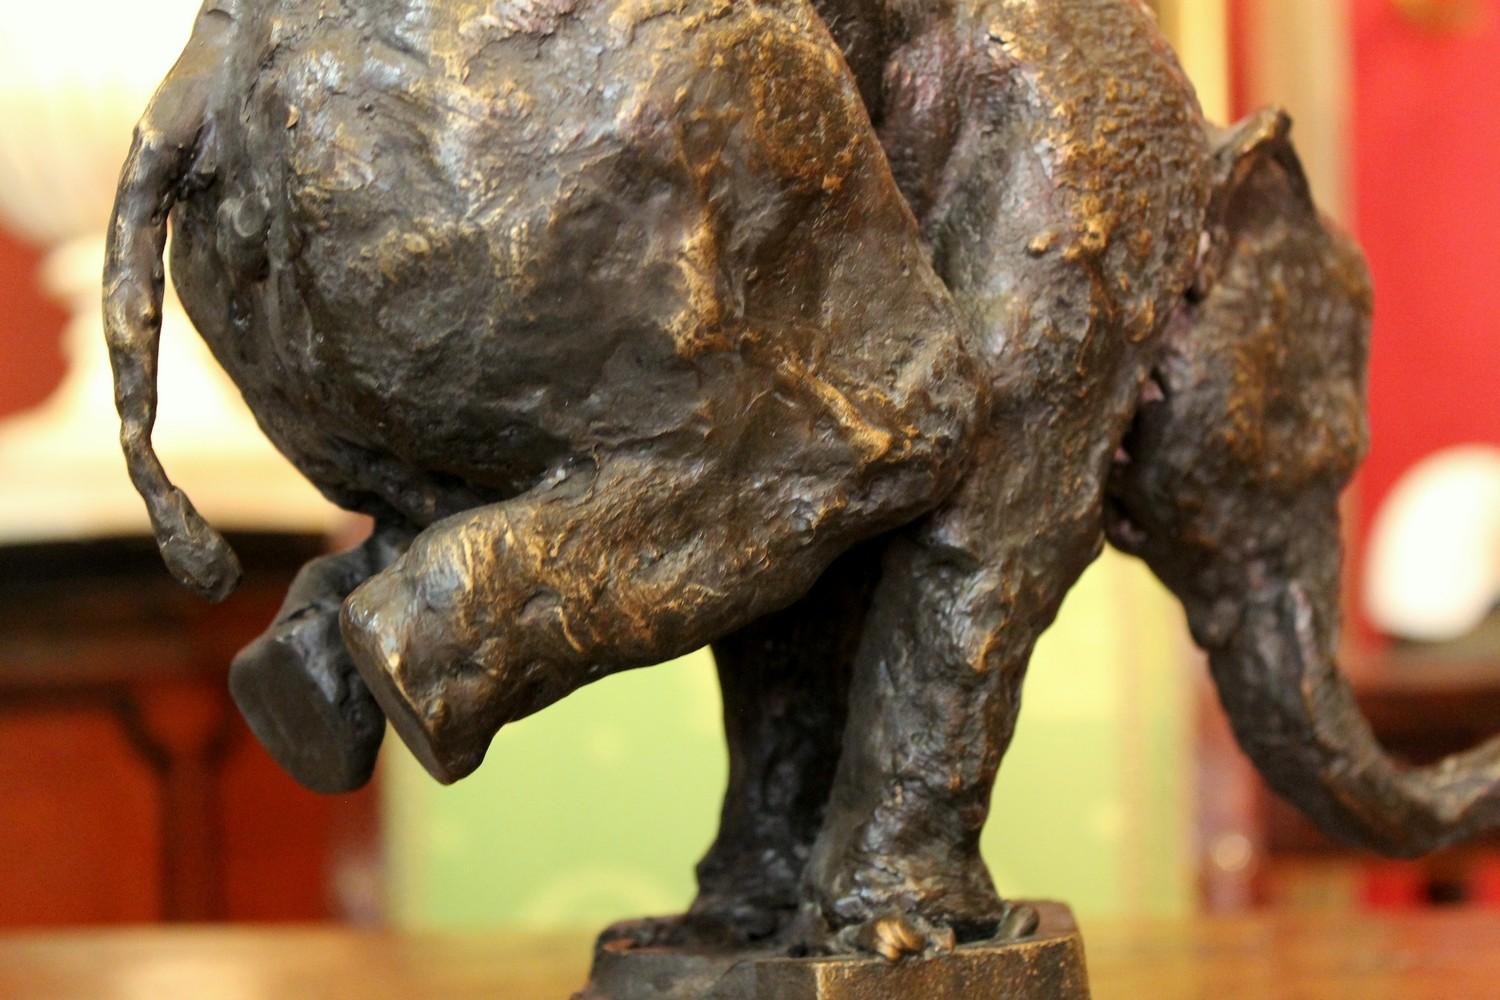 Elephant on Iron Pedestal, Lost Wax Casting Parcel-Gilt Patina Bronze Sculpture 16